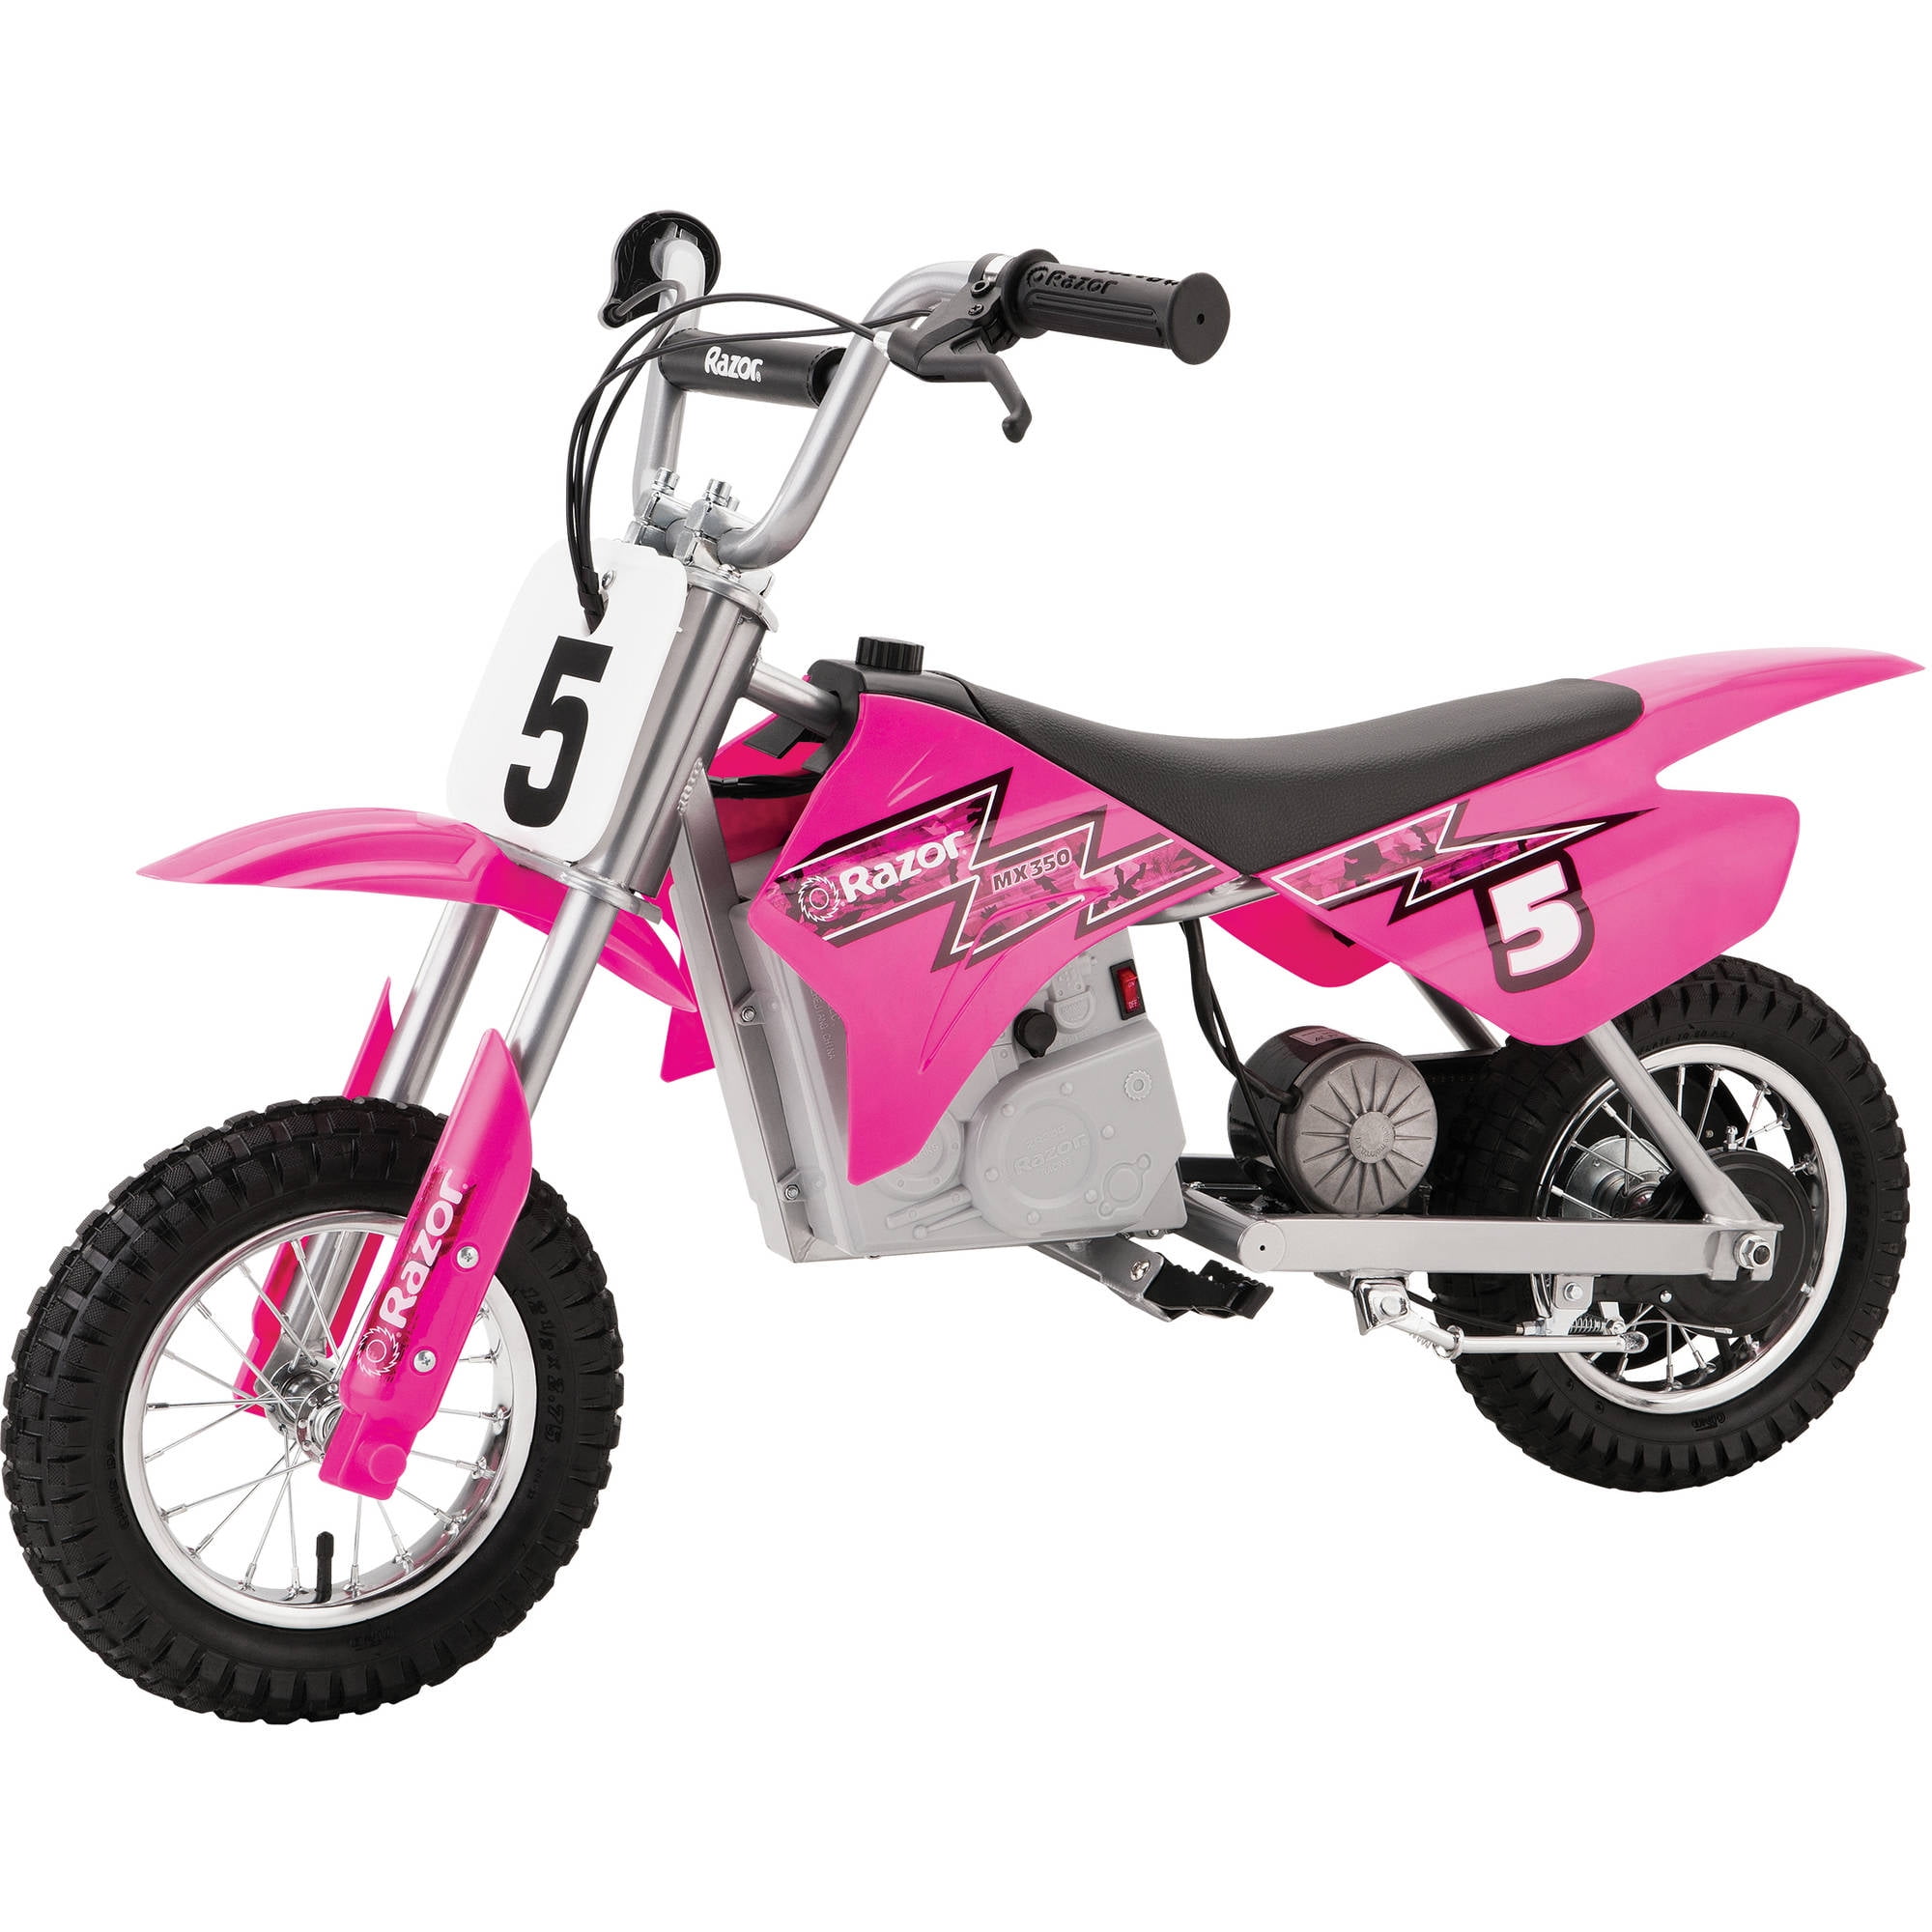 Razor MX350 24V Dirt Rocket Electric Ride on Motocross Bike- Pink - Walmart.com - Walmart.com